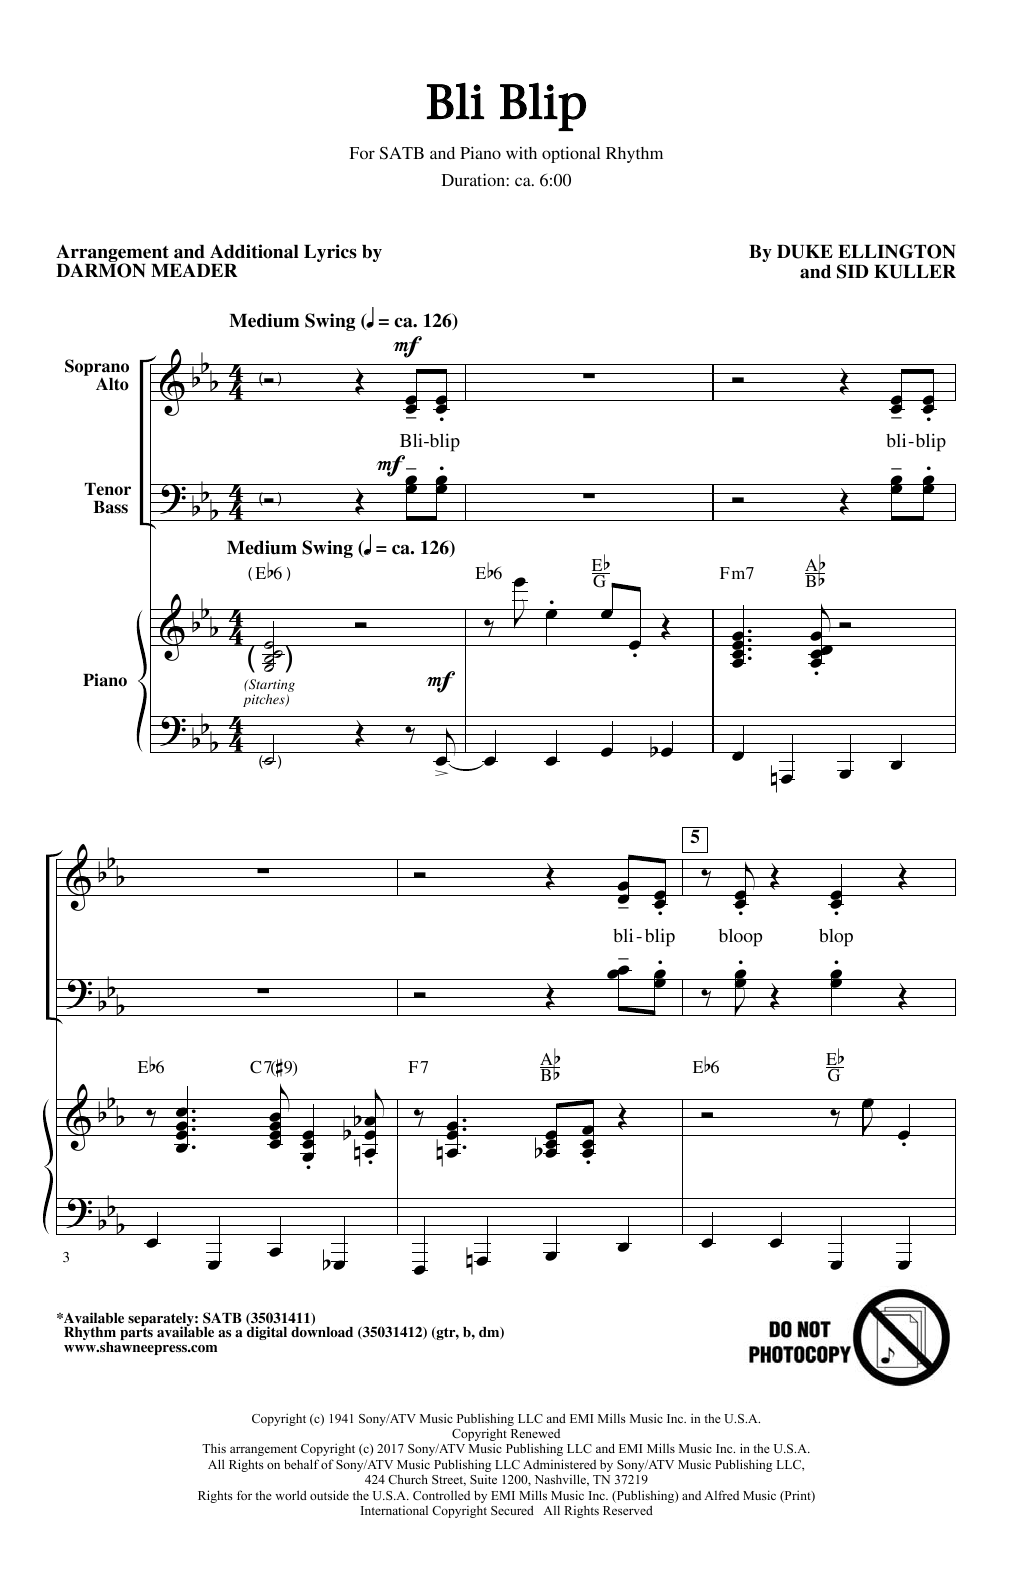 Darmon Meader Bli-Blip Sheet Music Notes & Chords for SATB - Download or Print PDF